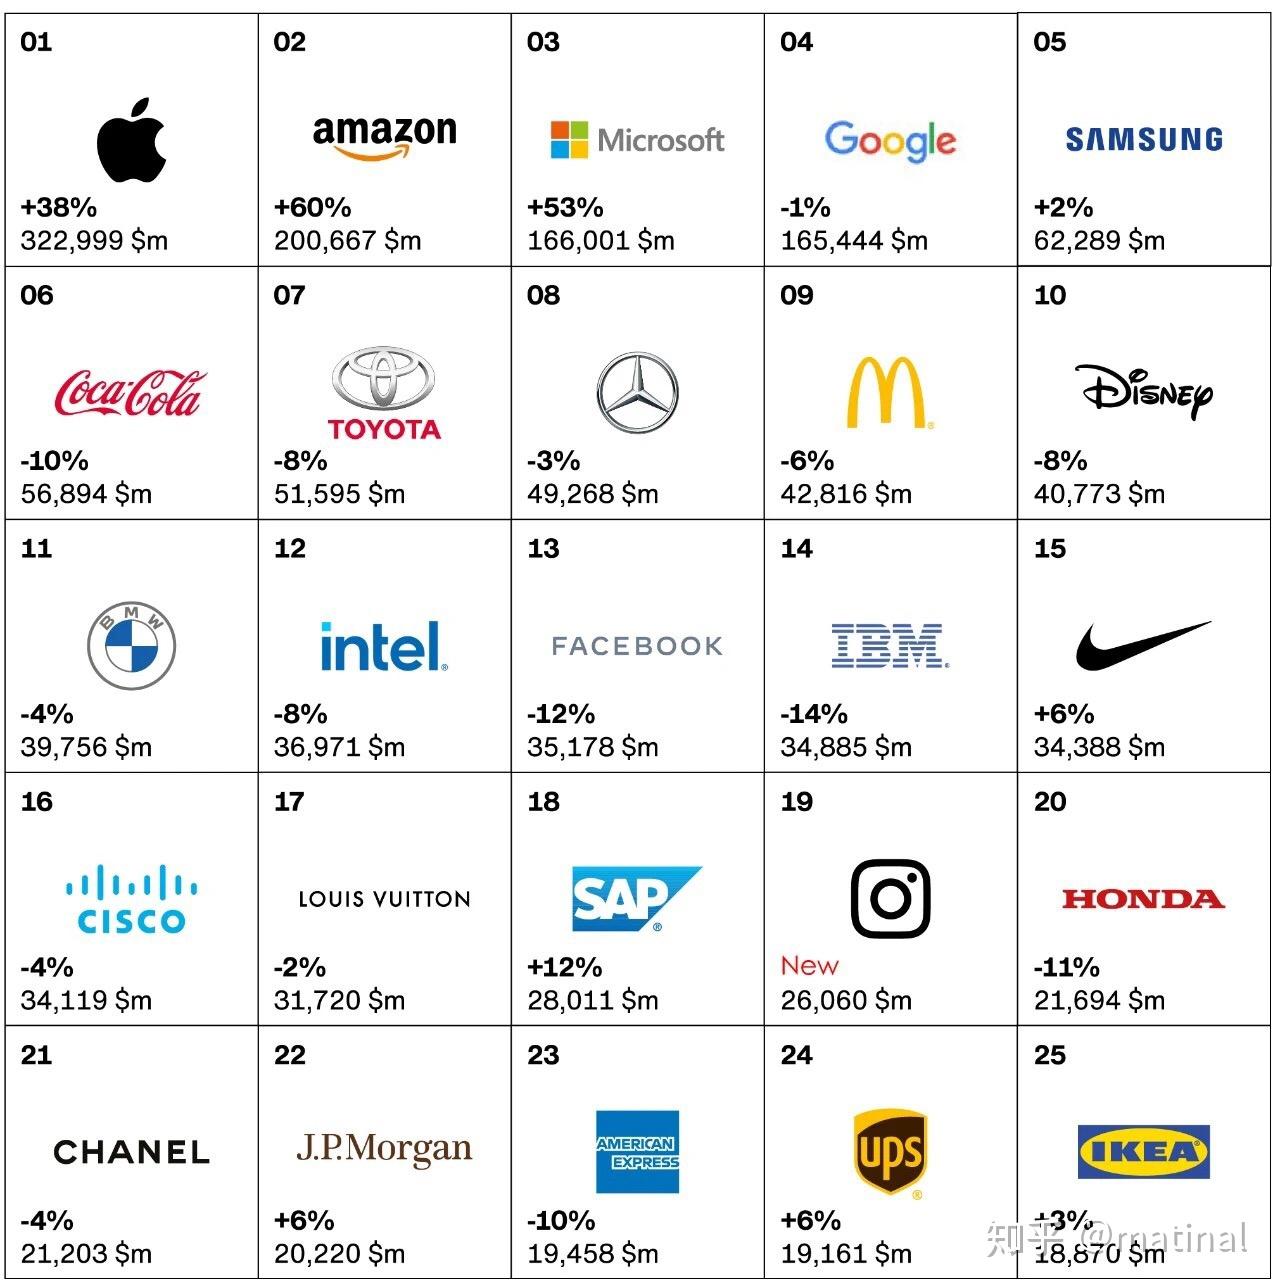 sap跃升至interbrand2020年全球最佳品牌榜第18位